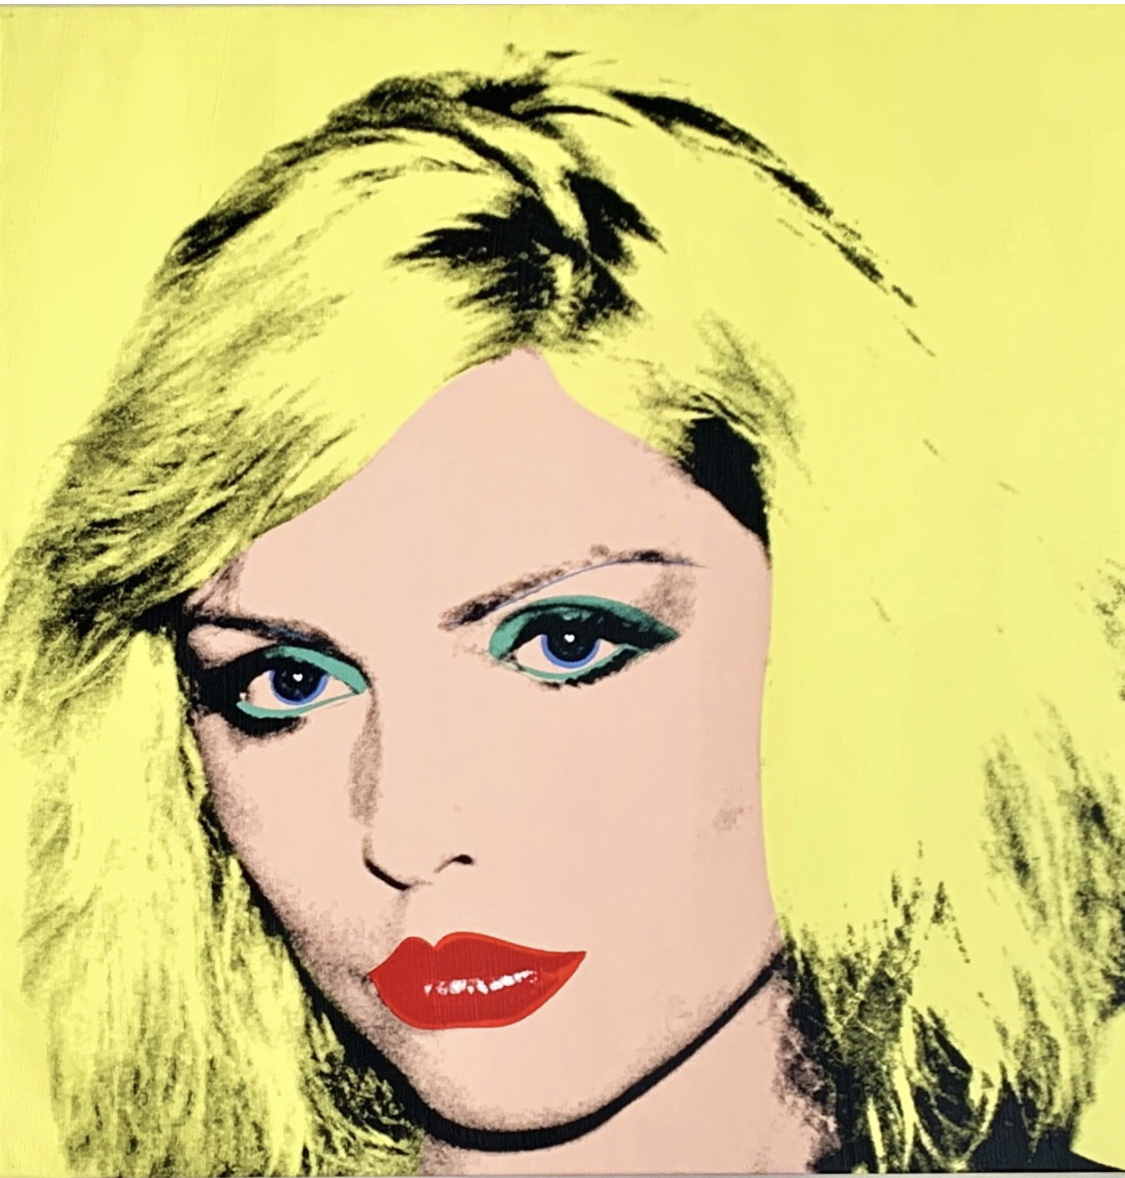 Andy Warhol's Debbie Harry portrait, 1980